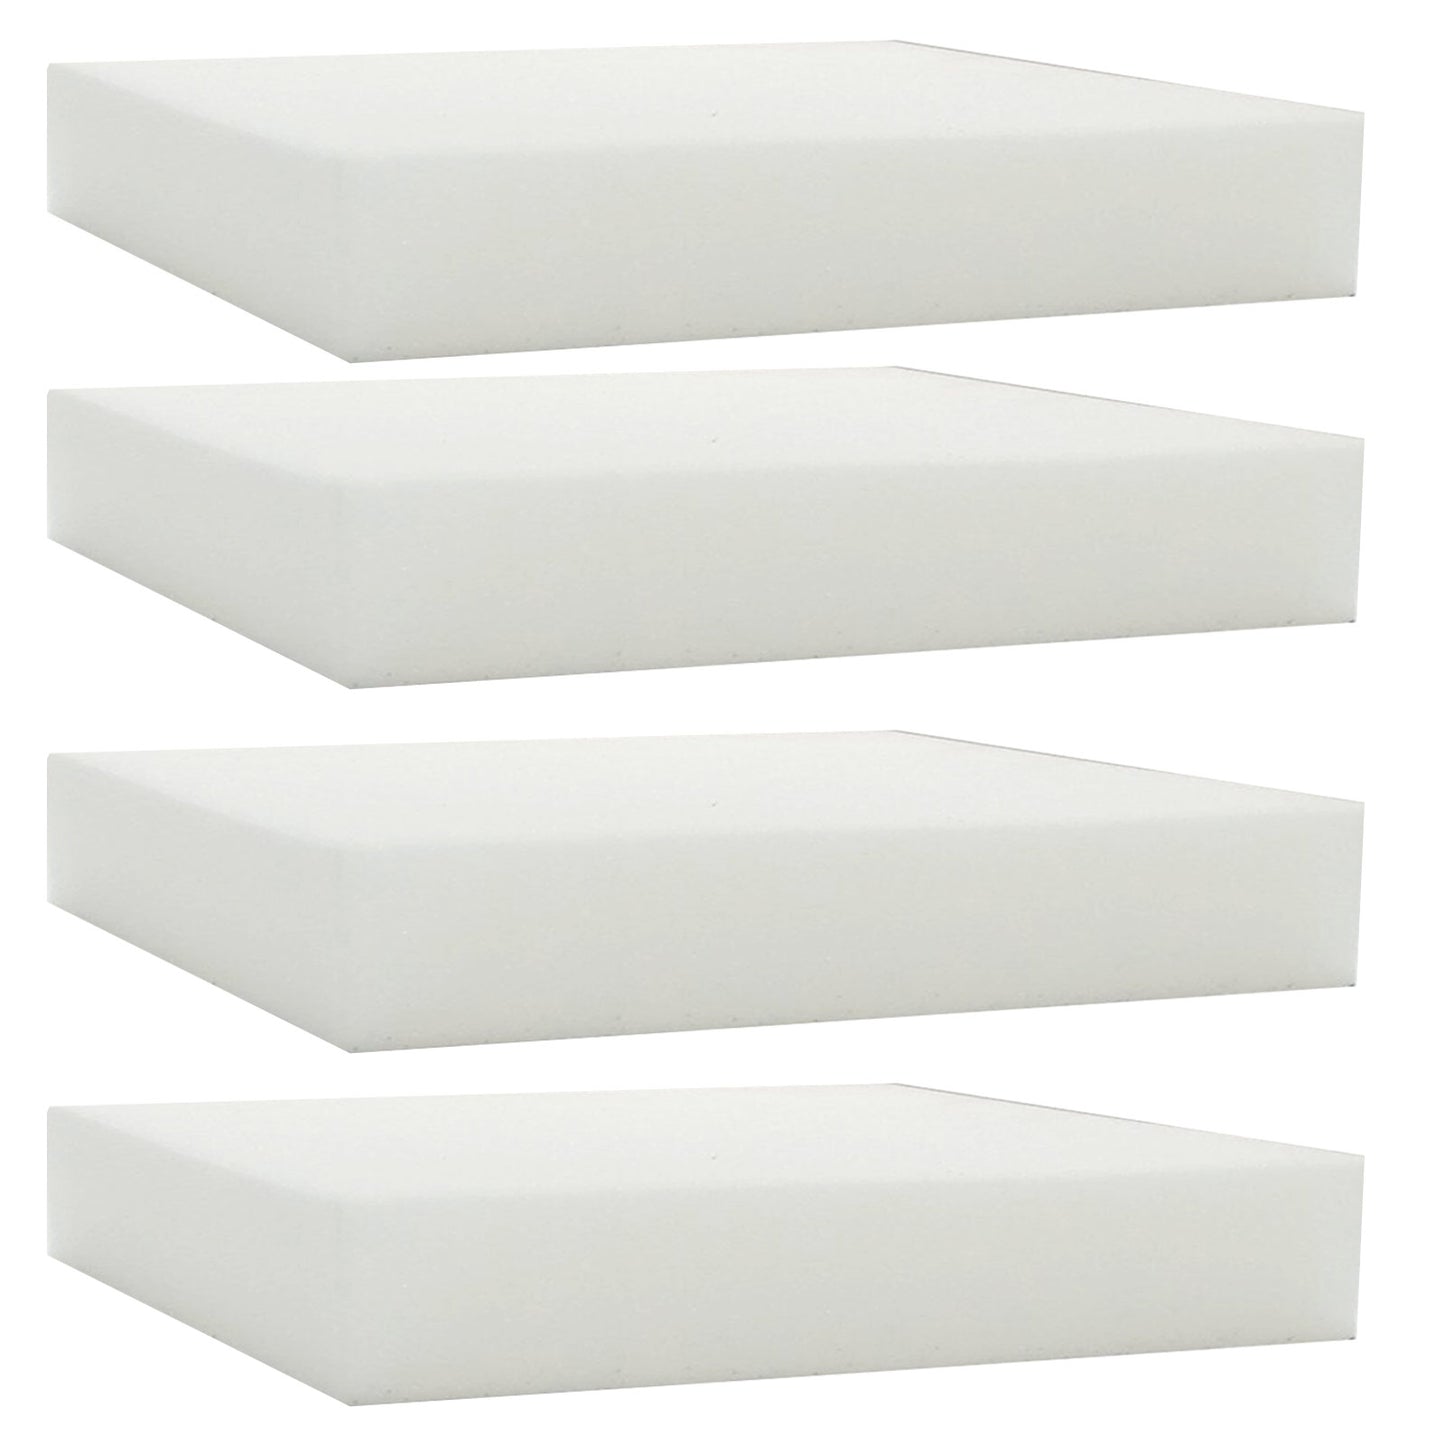 Mybecca 5" x 22"x 22" Upholstery Foam Cushion High Density (Seat Replacement, Upholstery Sheet, Foam Padding)